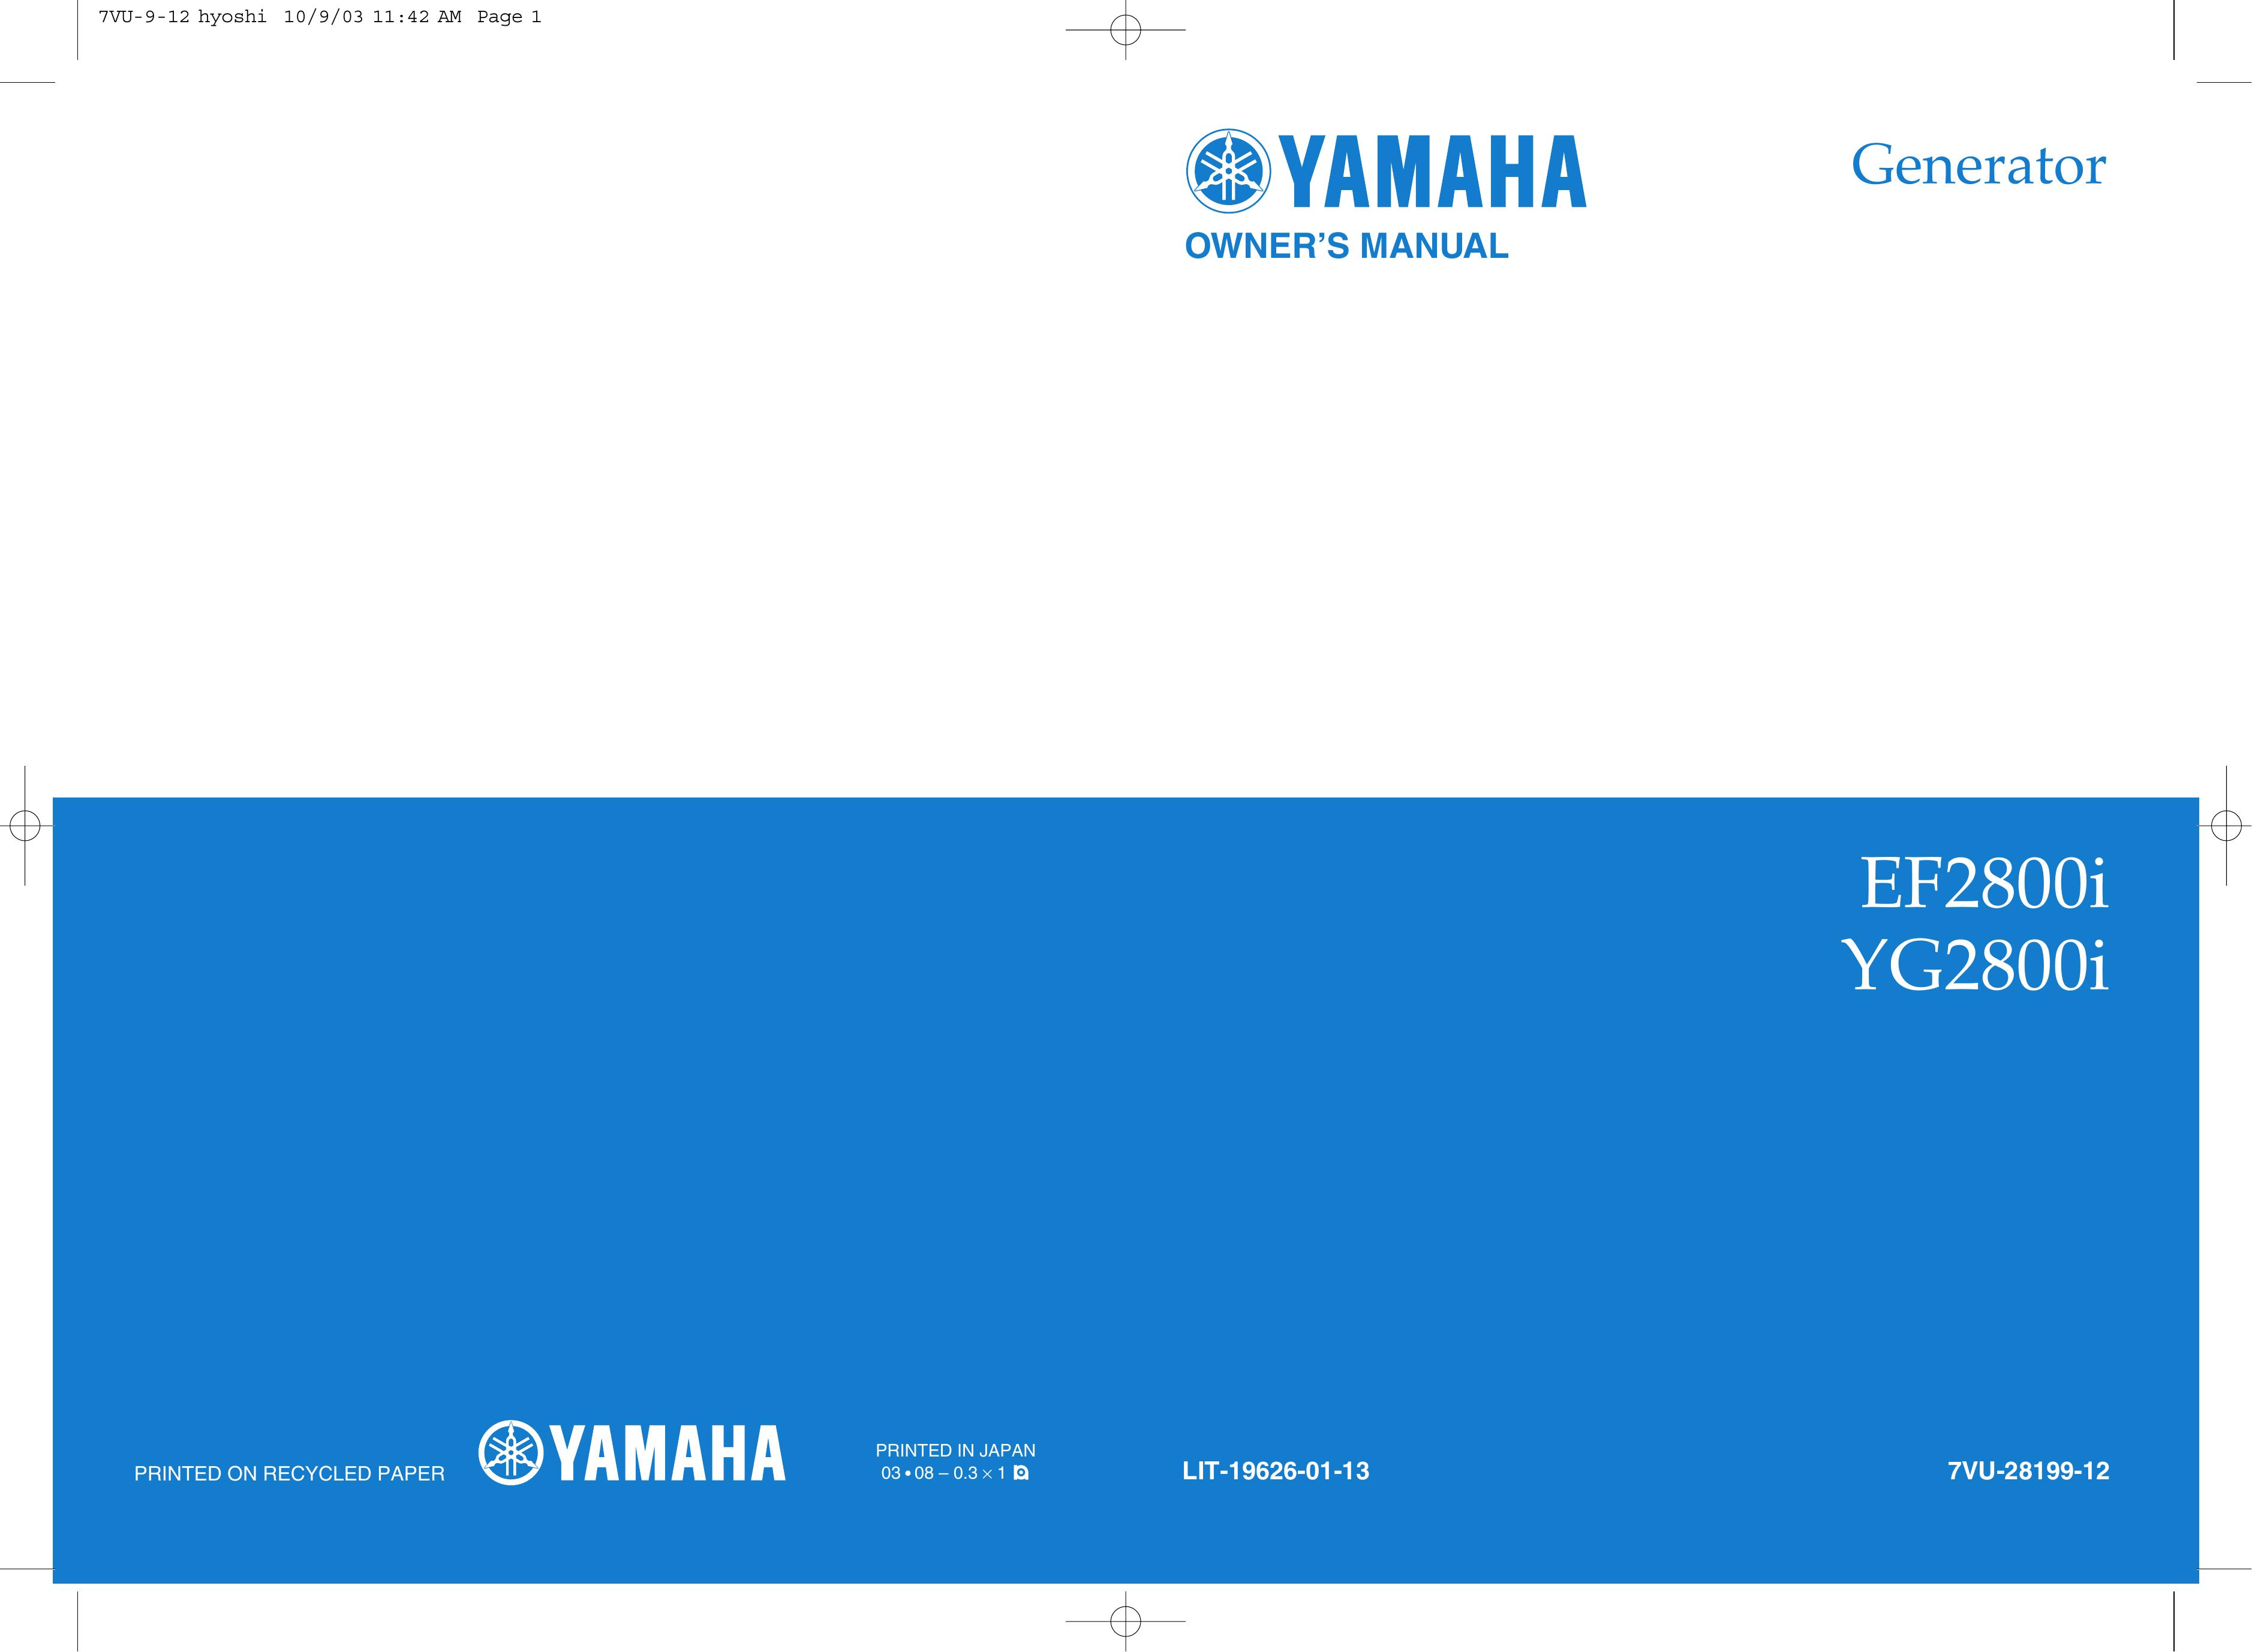 Yamaha yamaha generator Portable Generator User Manual